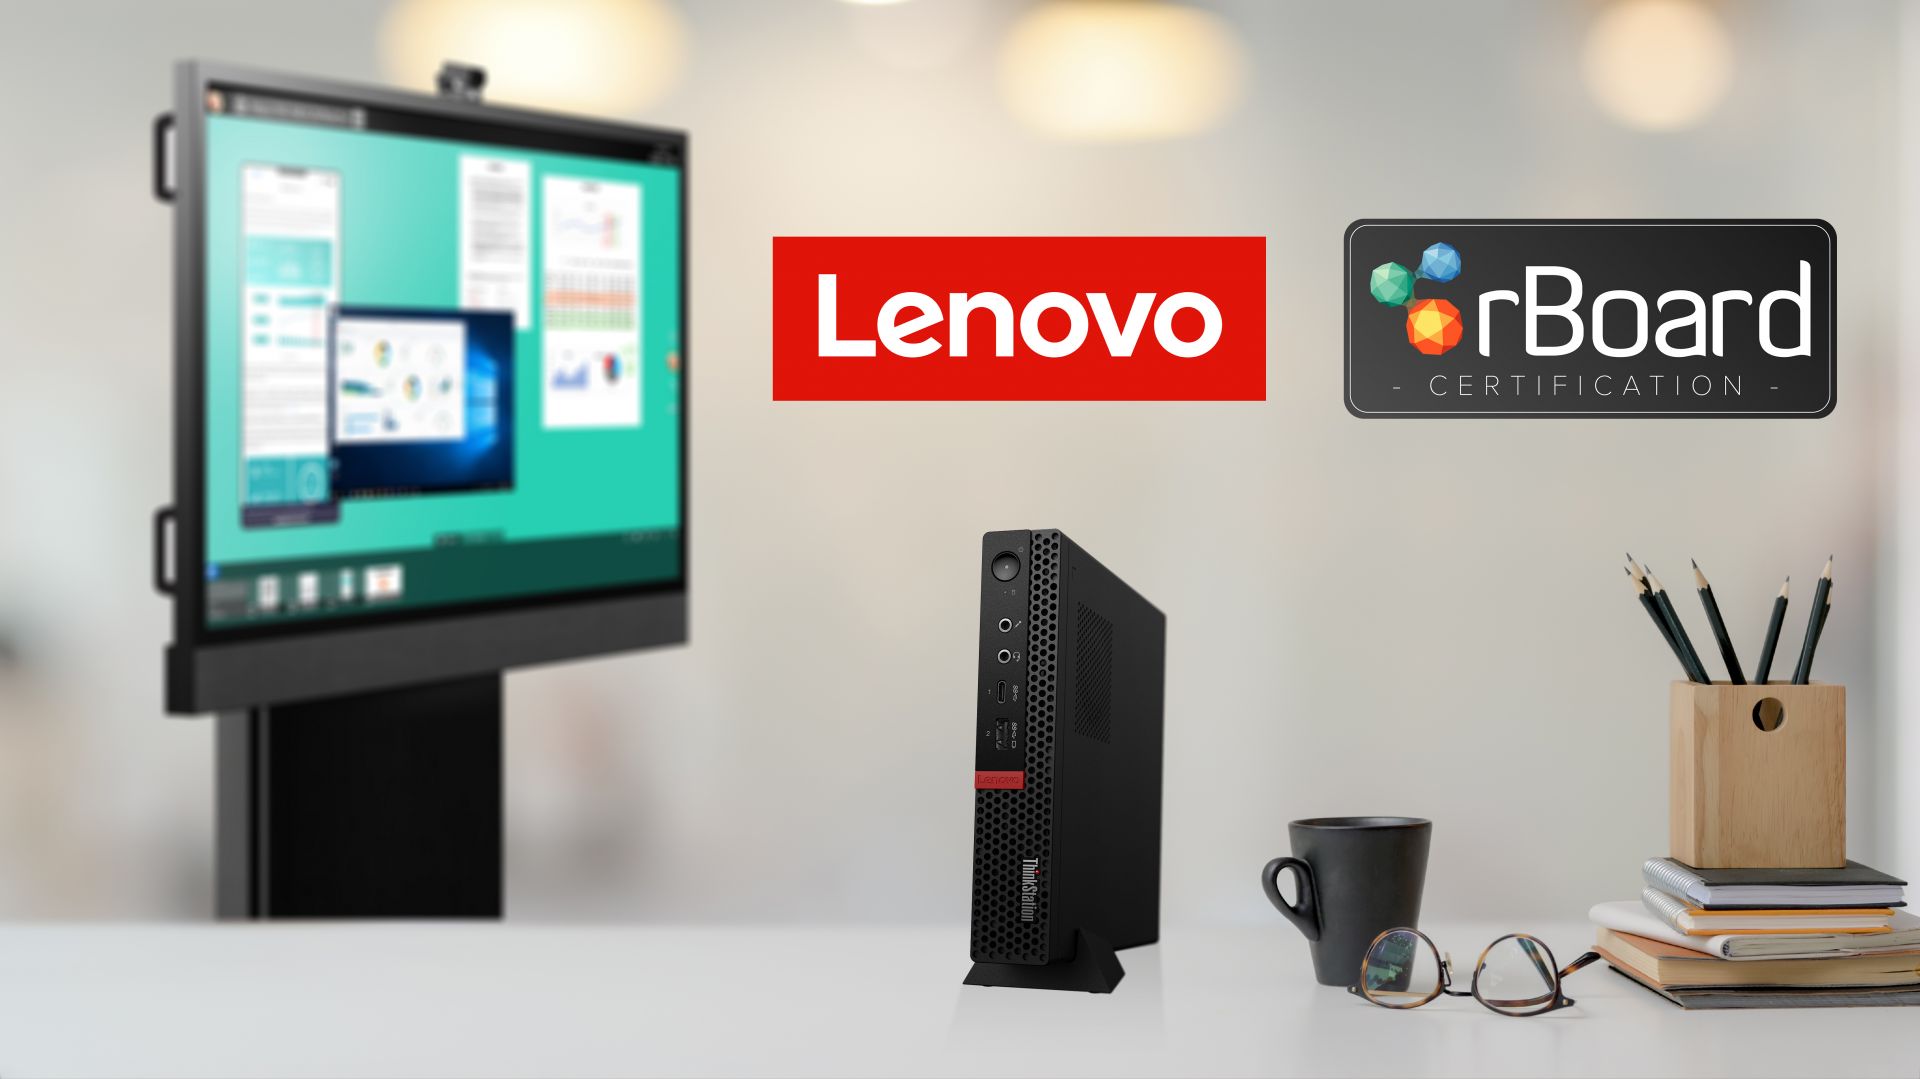 Lenovo Joins rBoard